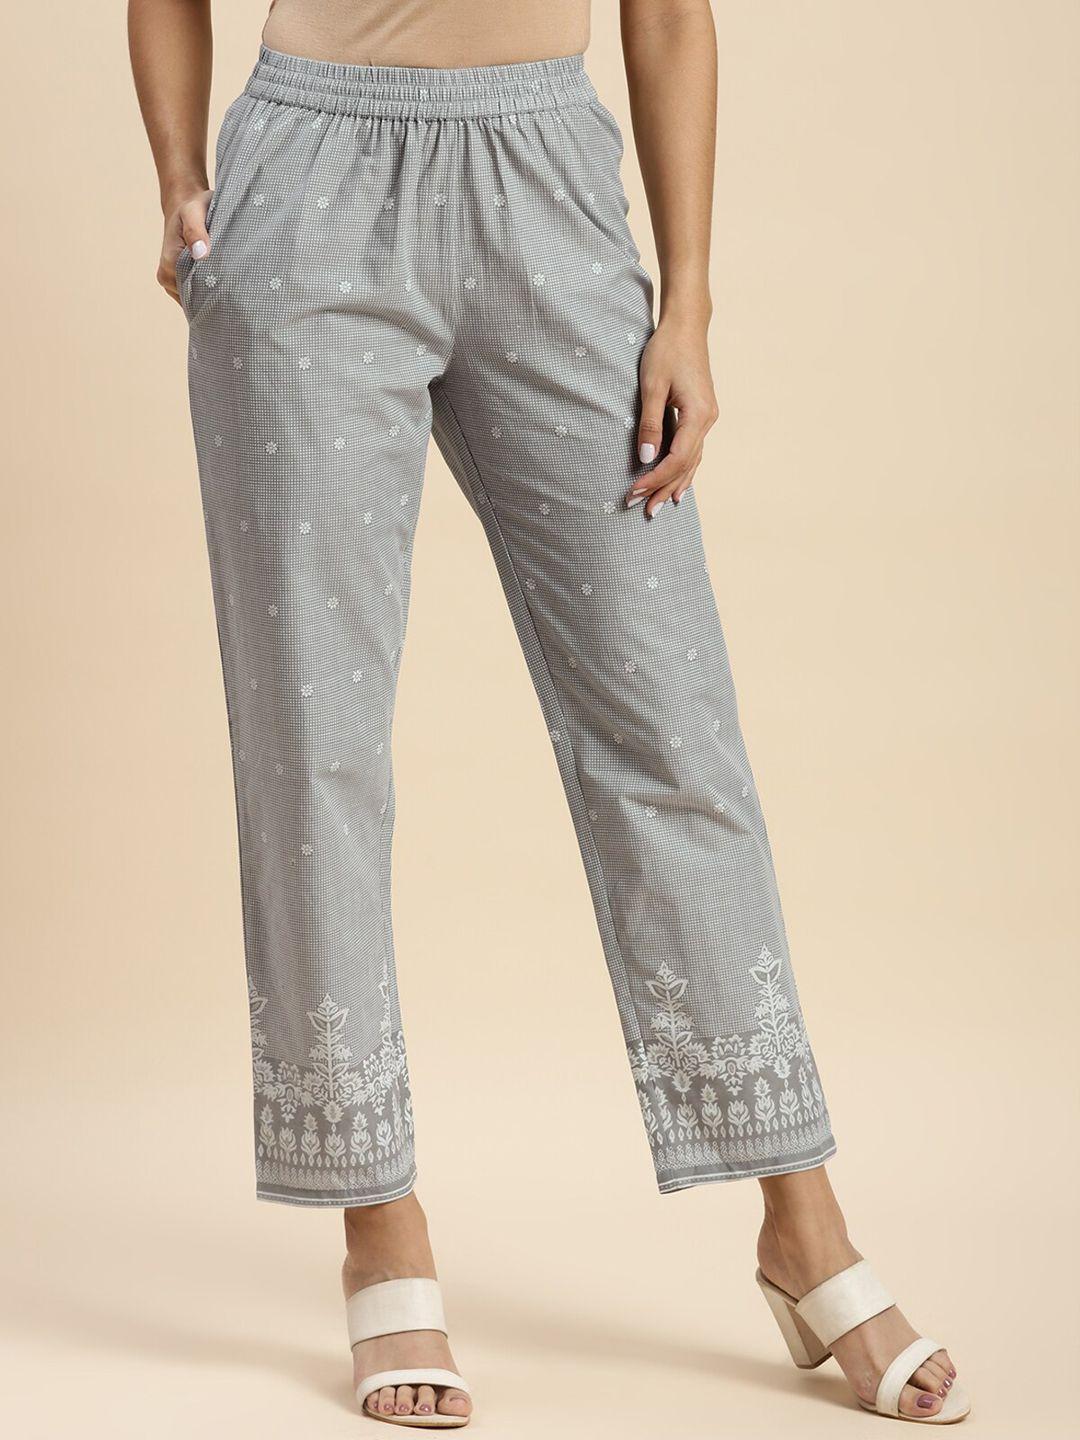 rangita women tailored slim fit floral printed pure cotton regular trousers